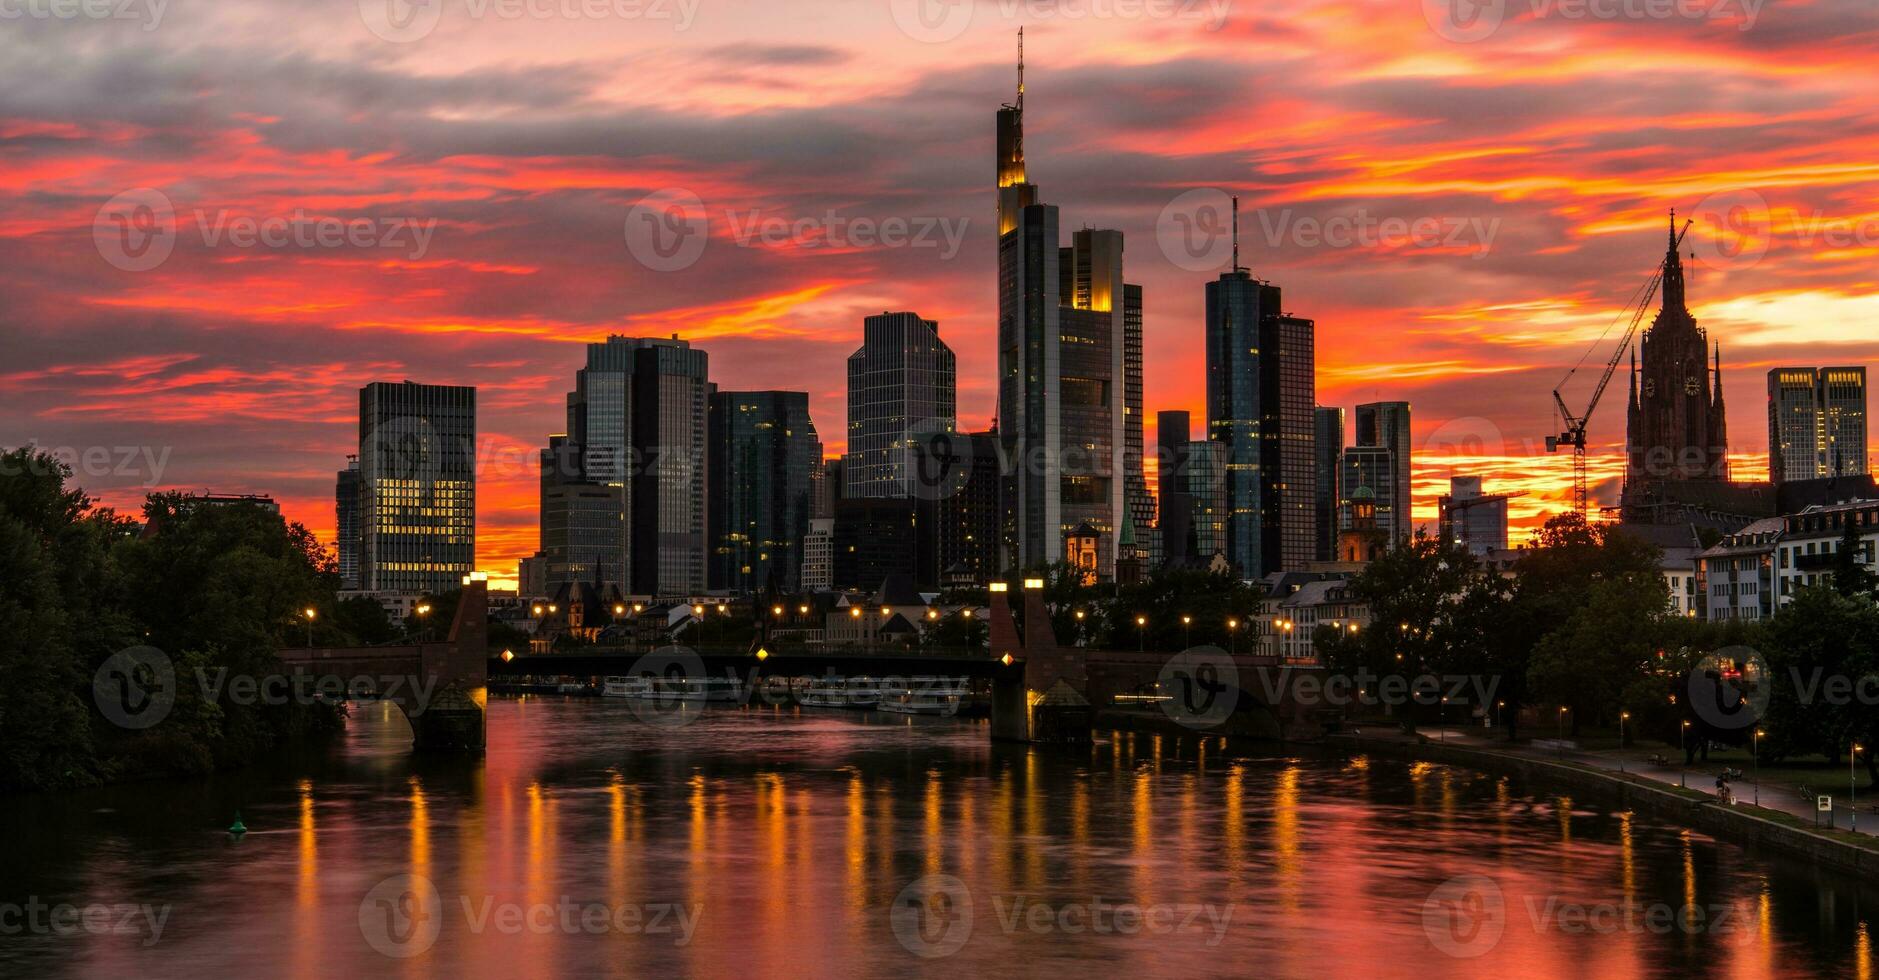 Burning Sky Over Frankfurt photo